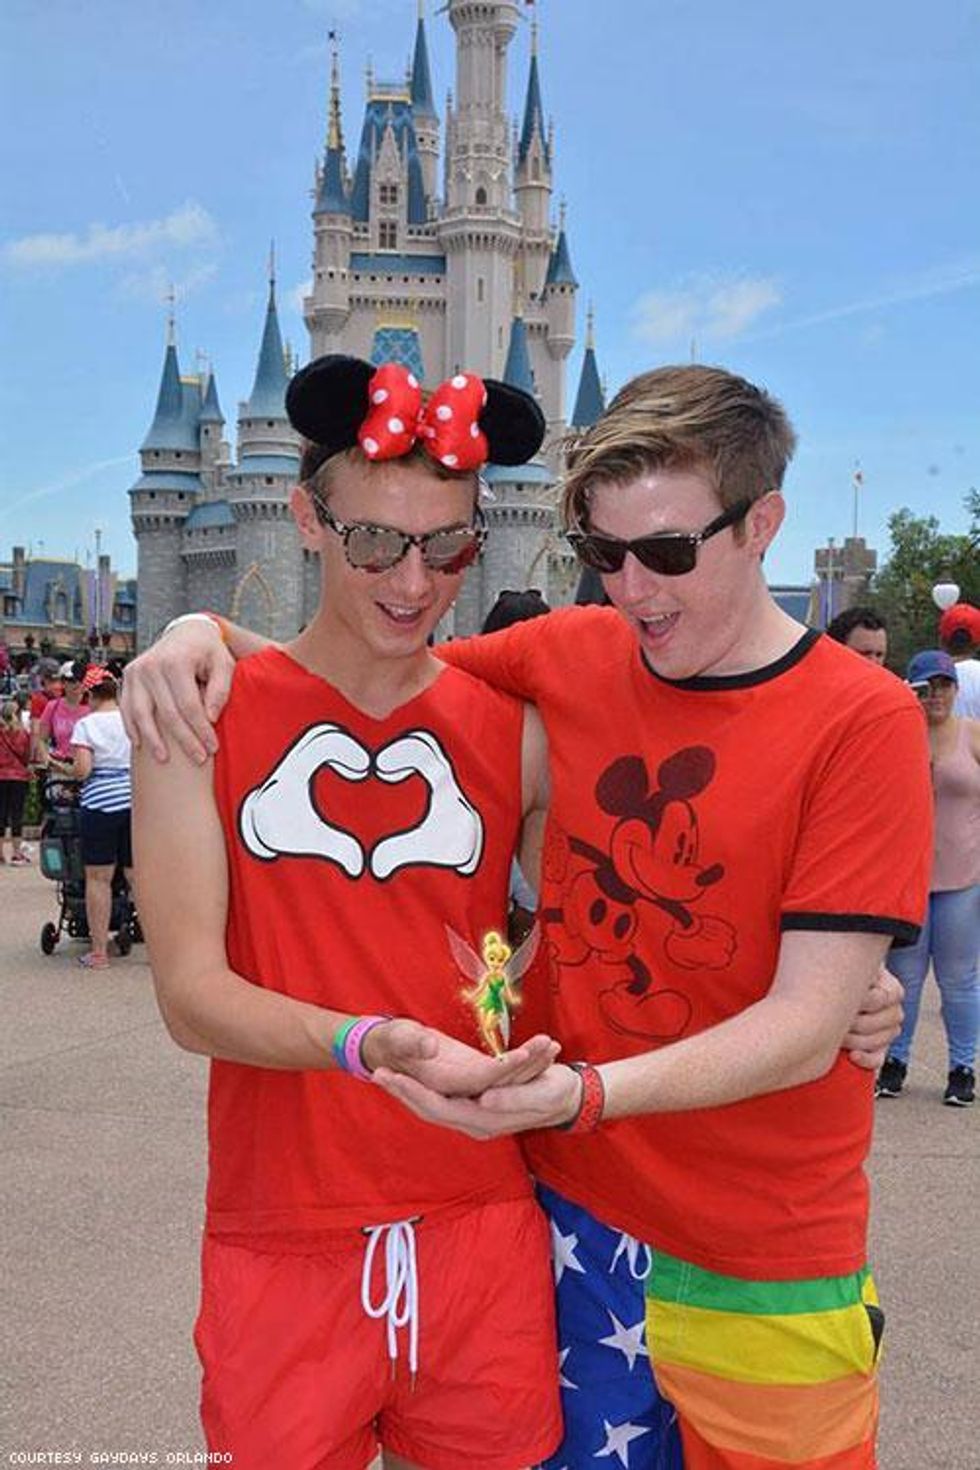 52 Photos Show the Delights of Disney World at GayDays Orlando